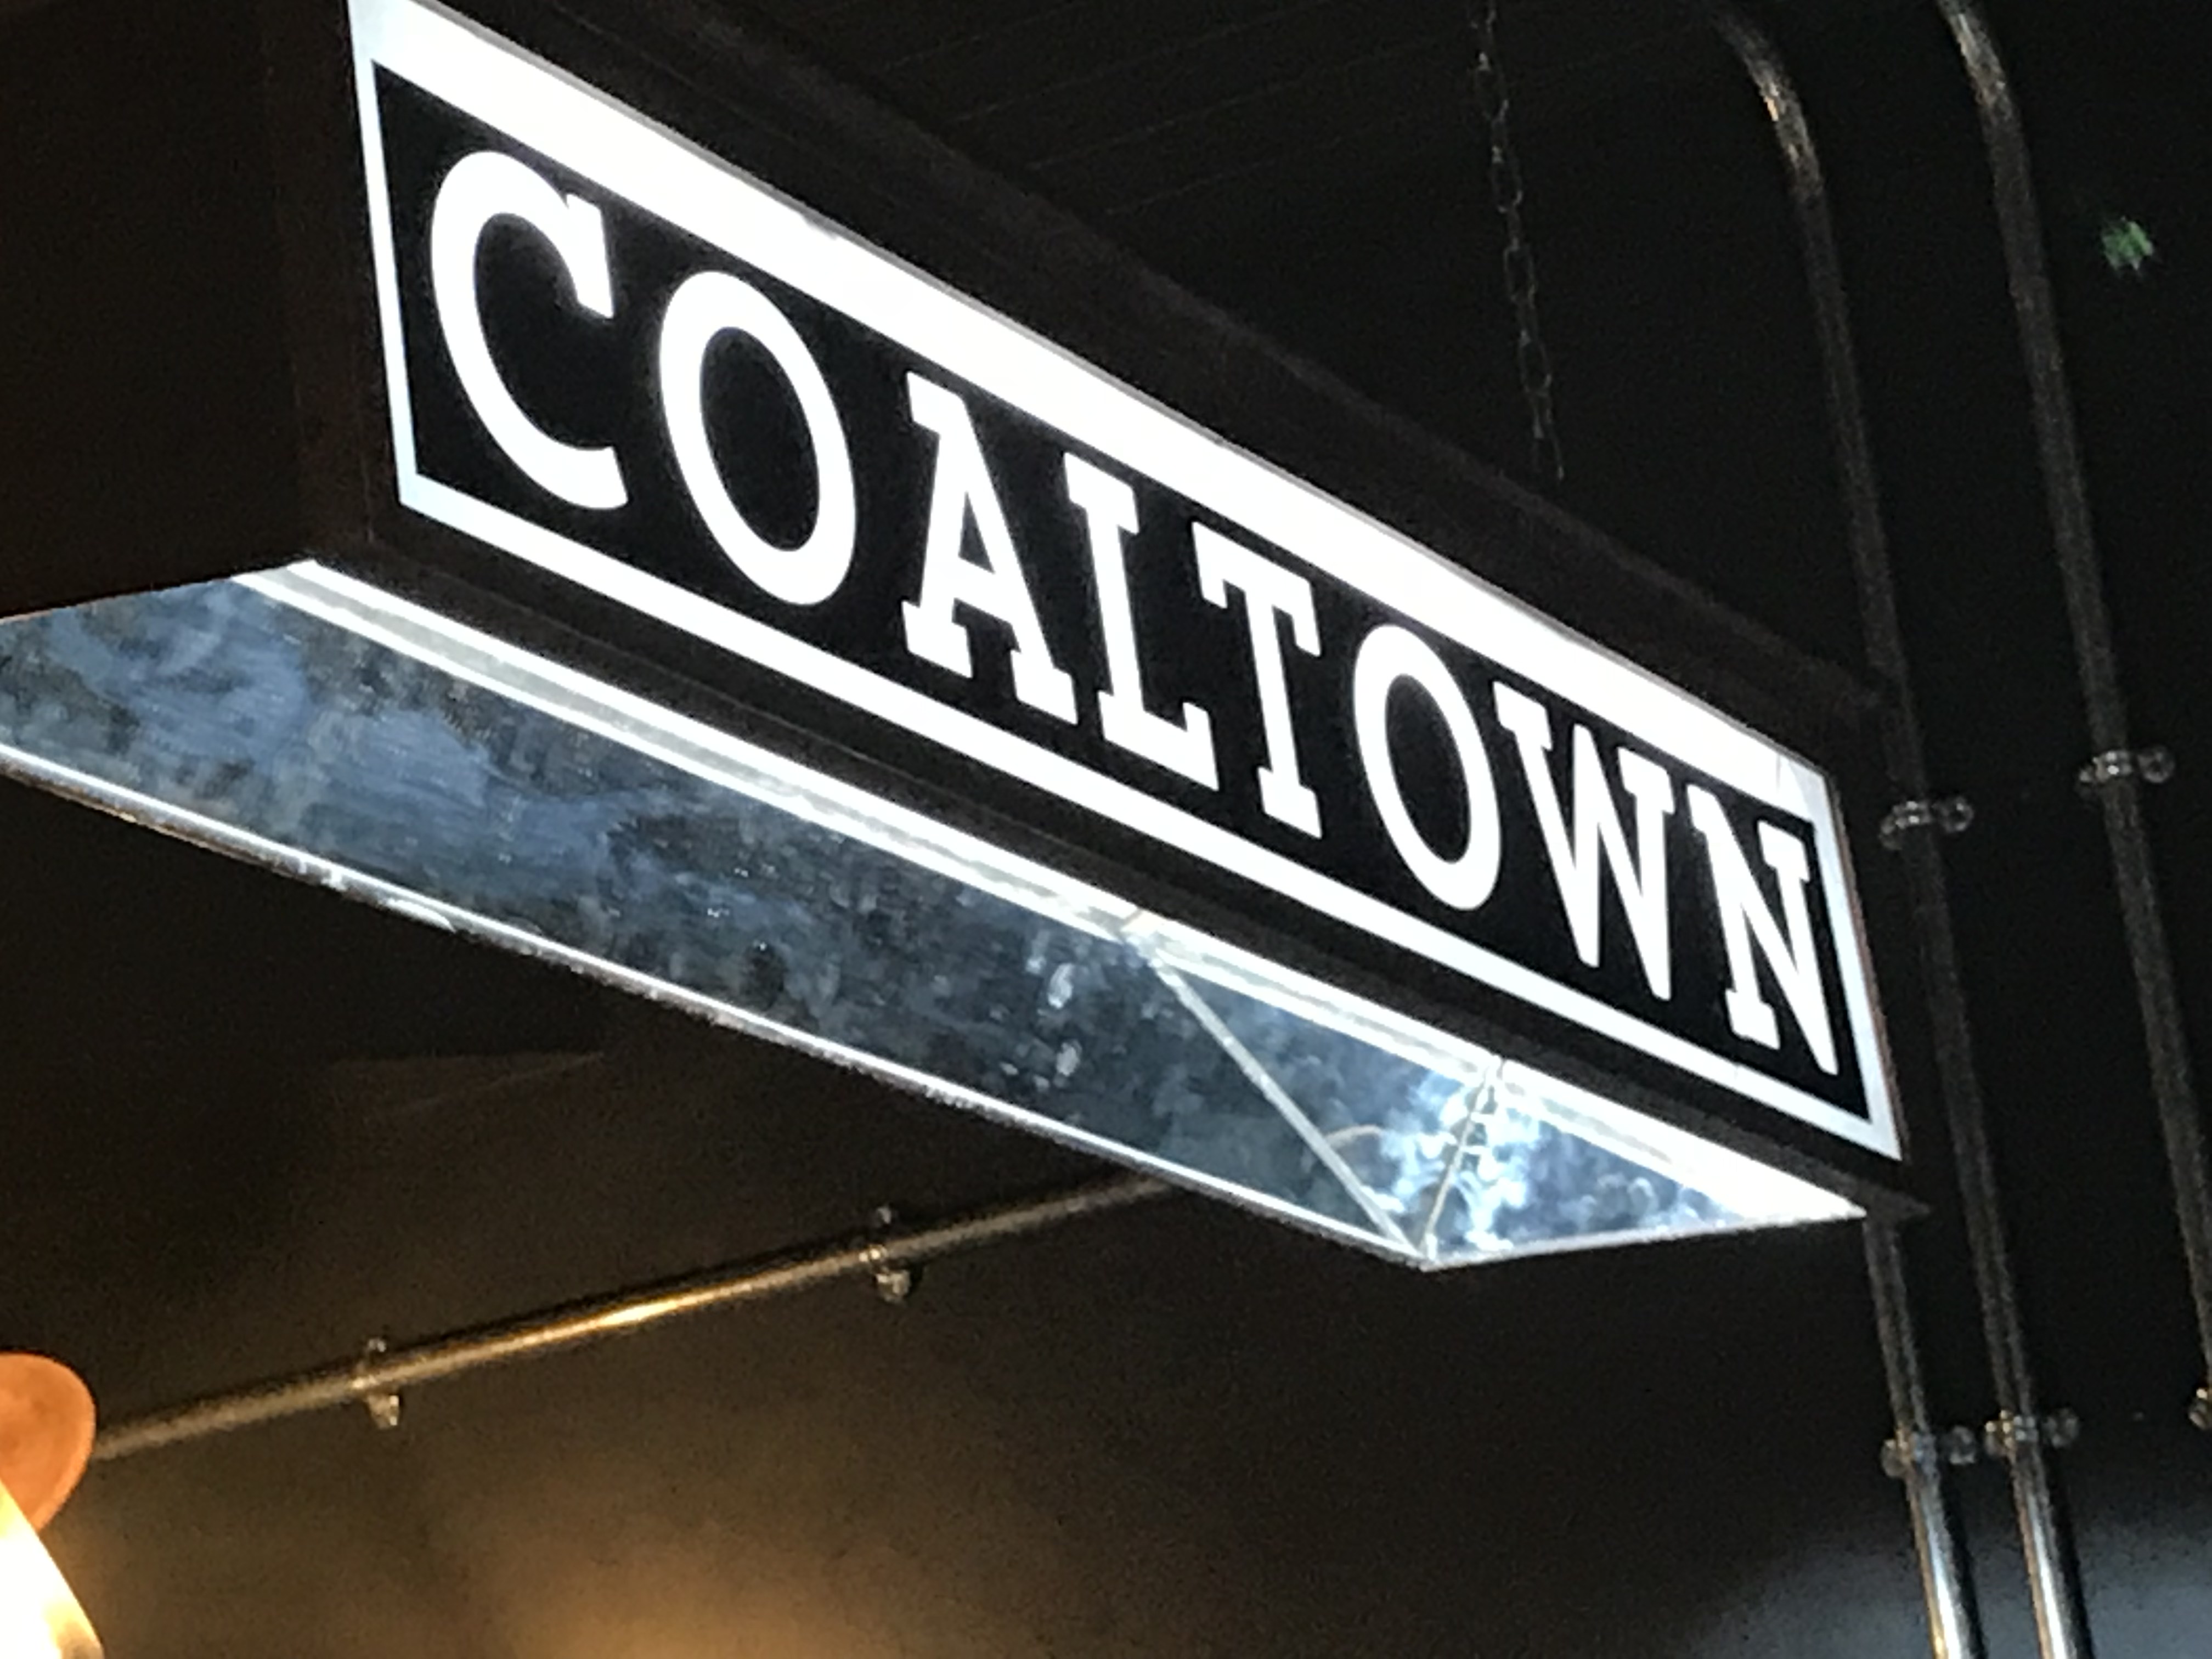 Coaltown Coffee Pop-up Shop